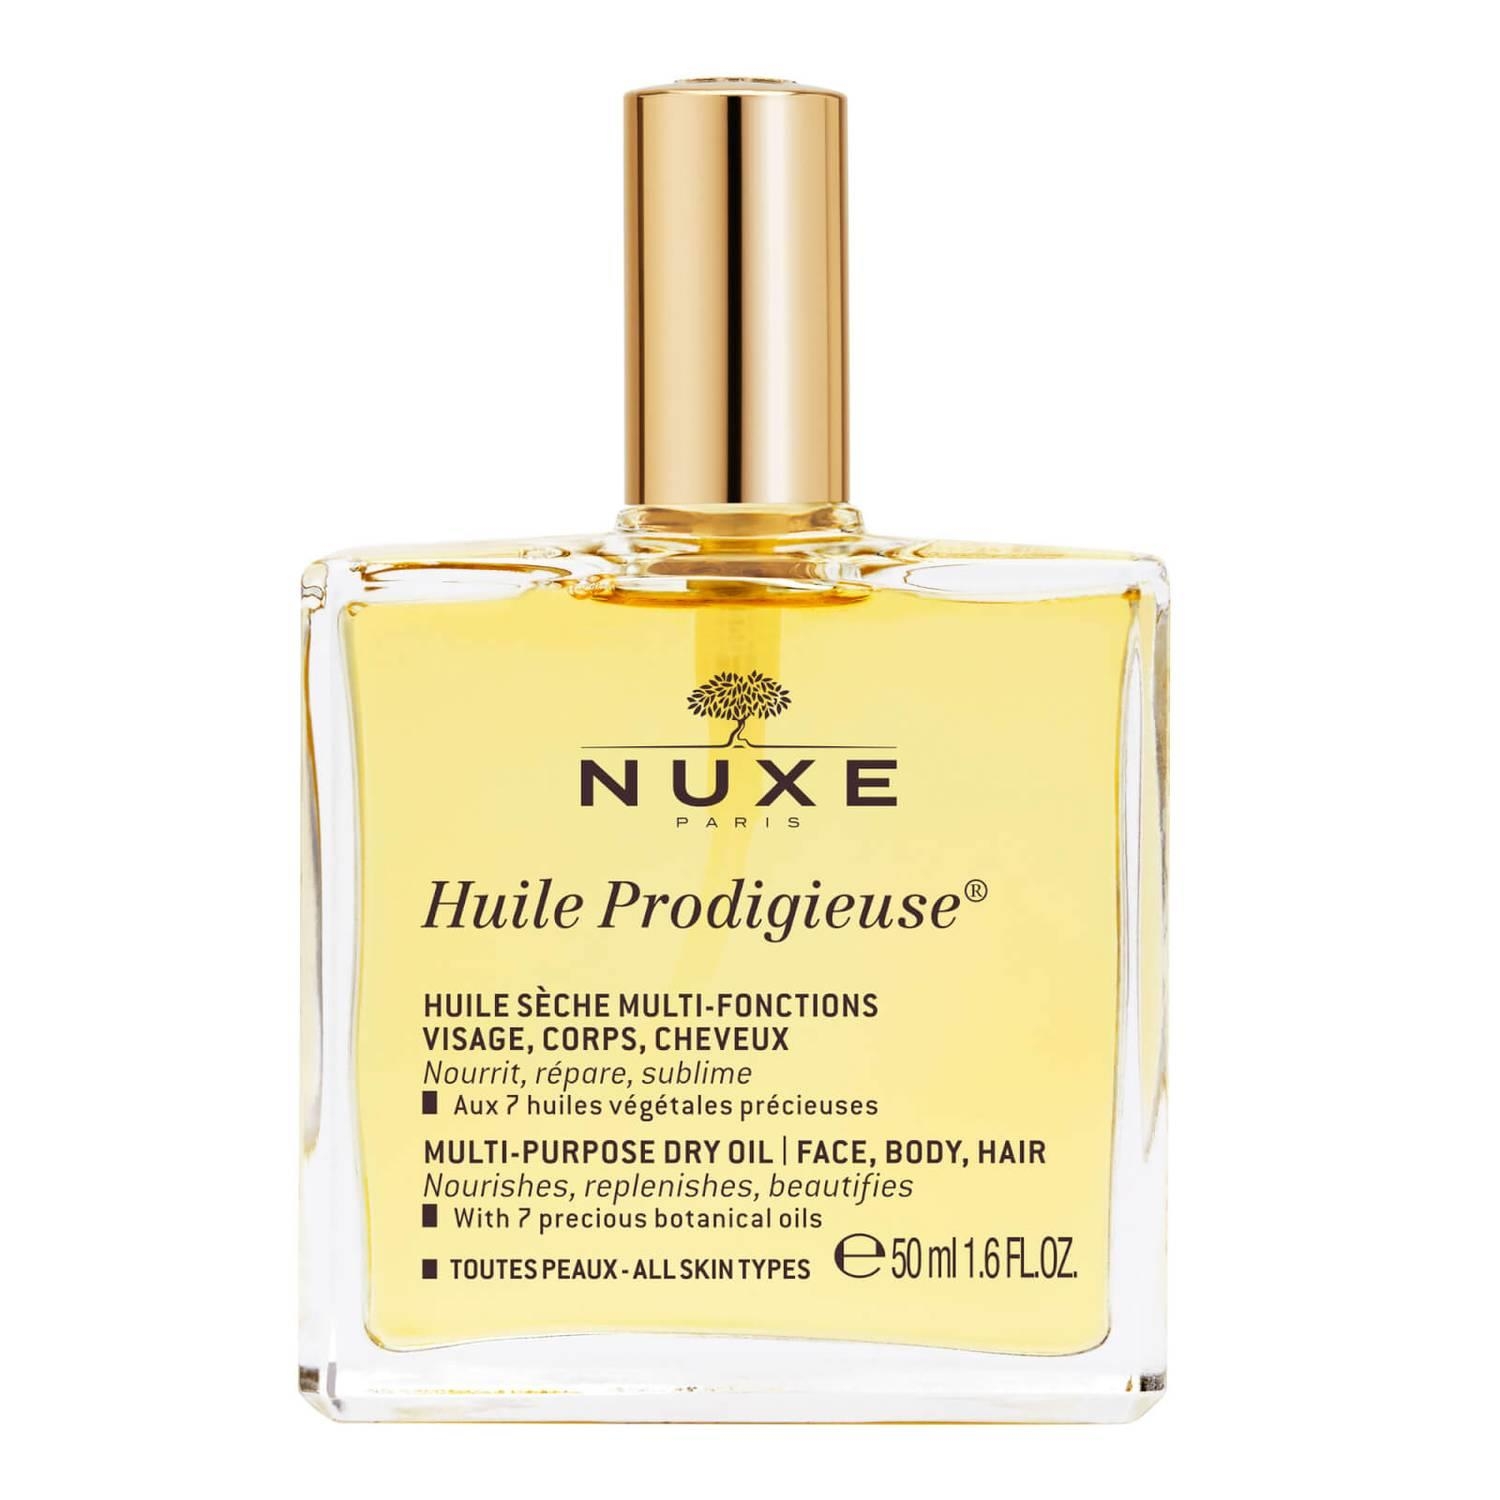 Nuxe Huile Prodigieuse 50 мл Многофункциональное сухое масло nuxe цветочное сухое масло huile prodigieuse florale 50 мл nuxe prodigieuse